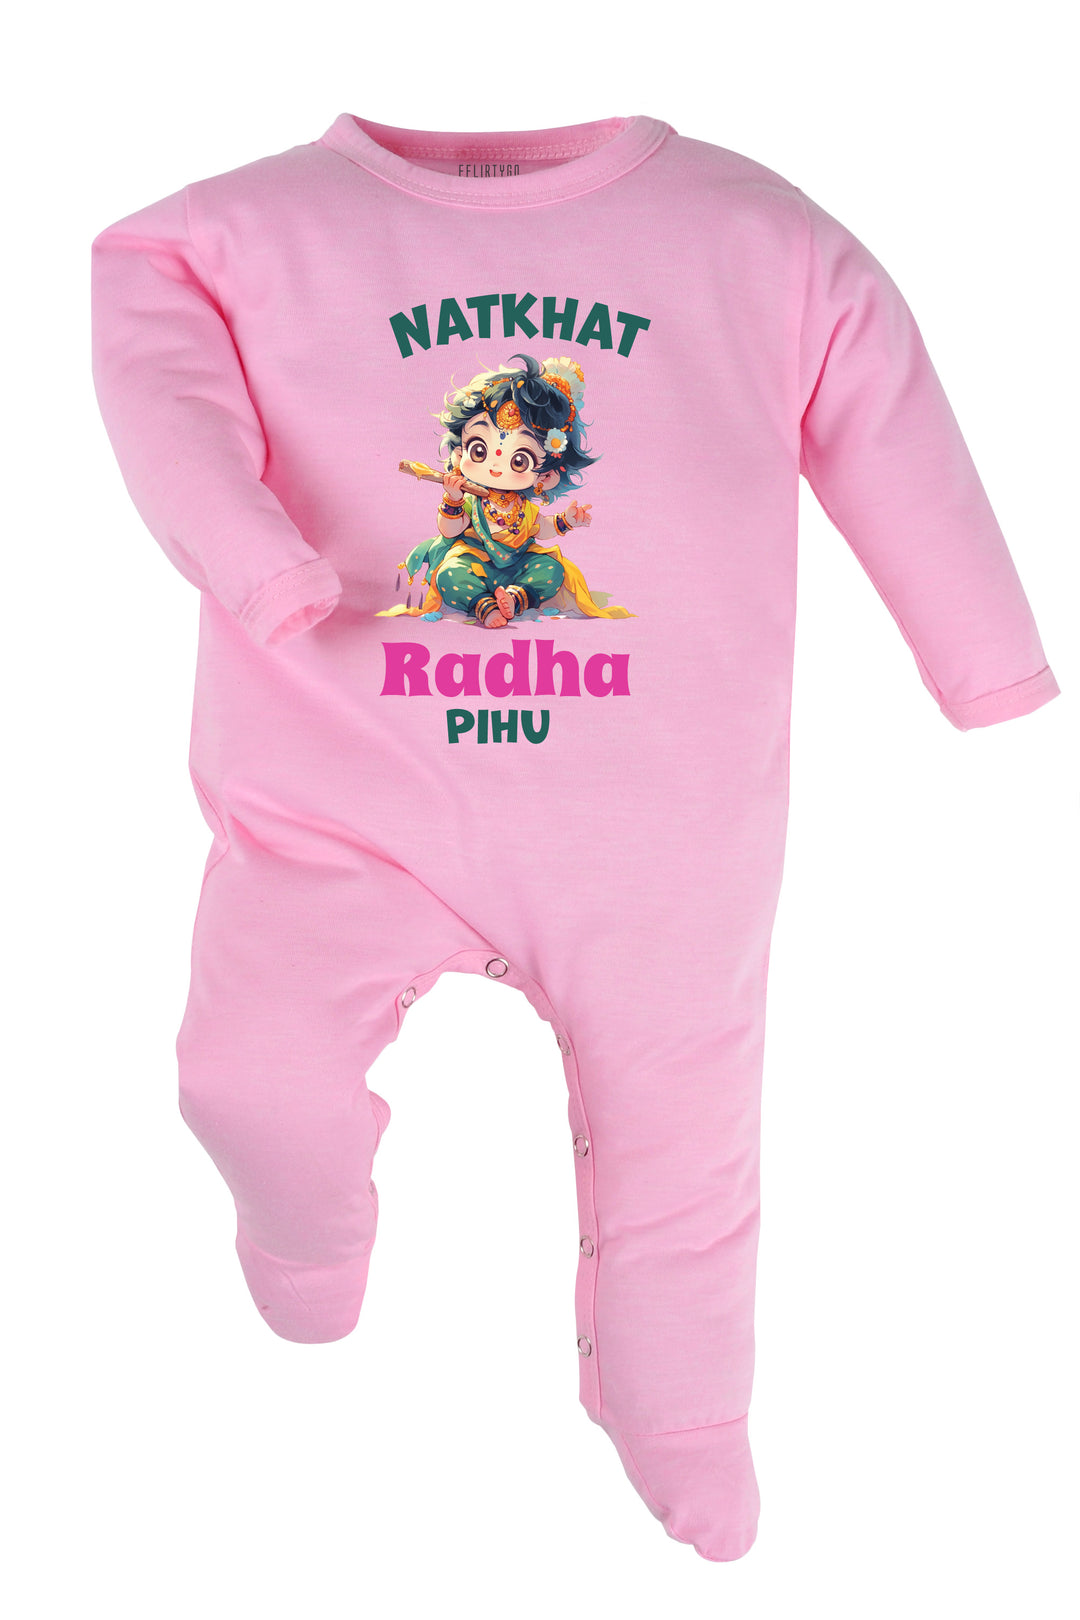 Natkhat Radha Baby Romper | Onesies w/ Custom Name